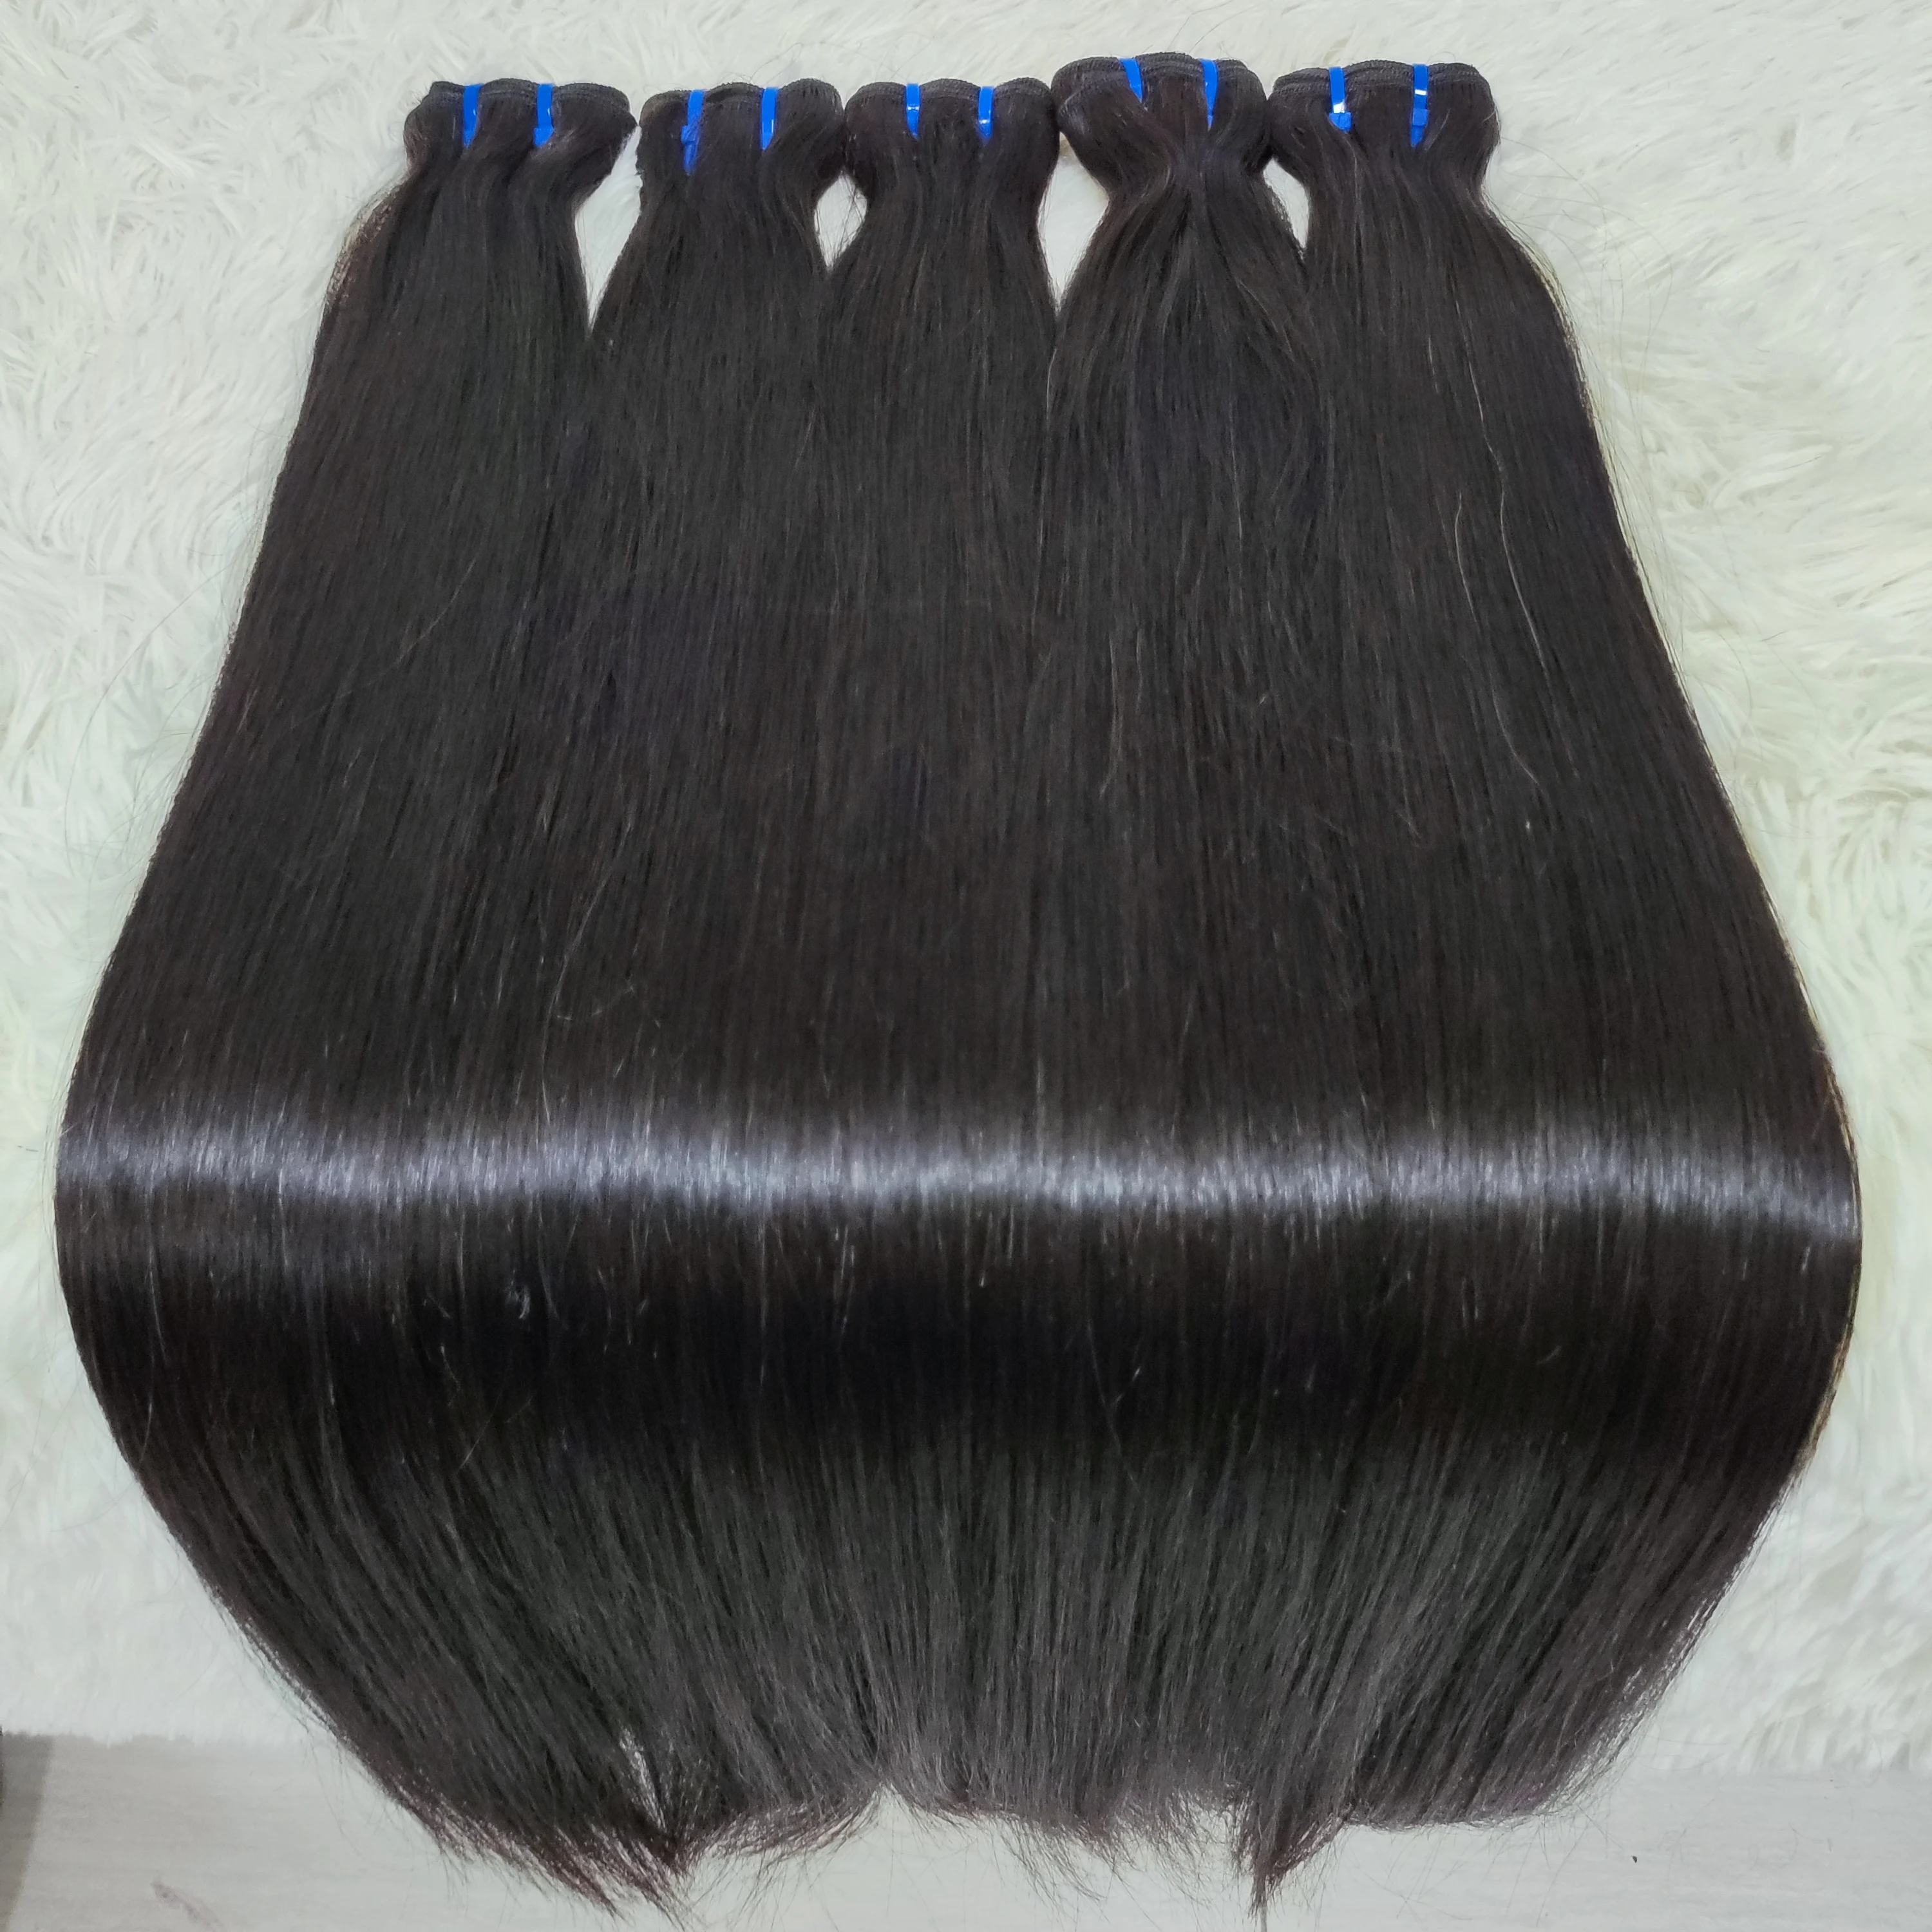 

Letsfly factory price 11A vienamien super double drawn human Hair Bundles 100gram straight Vietnam hair extension free shipping